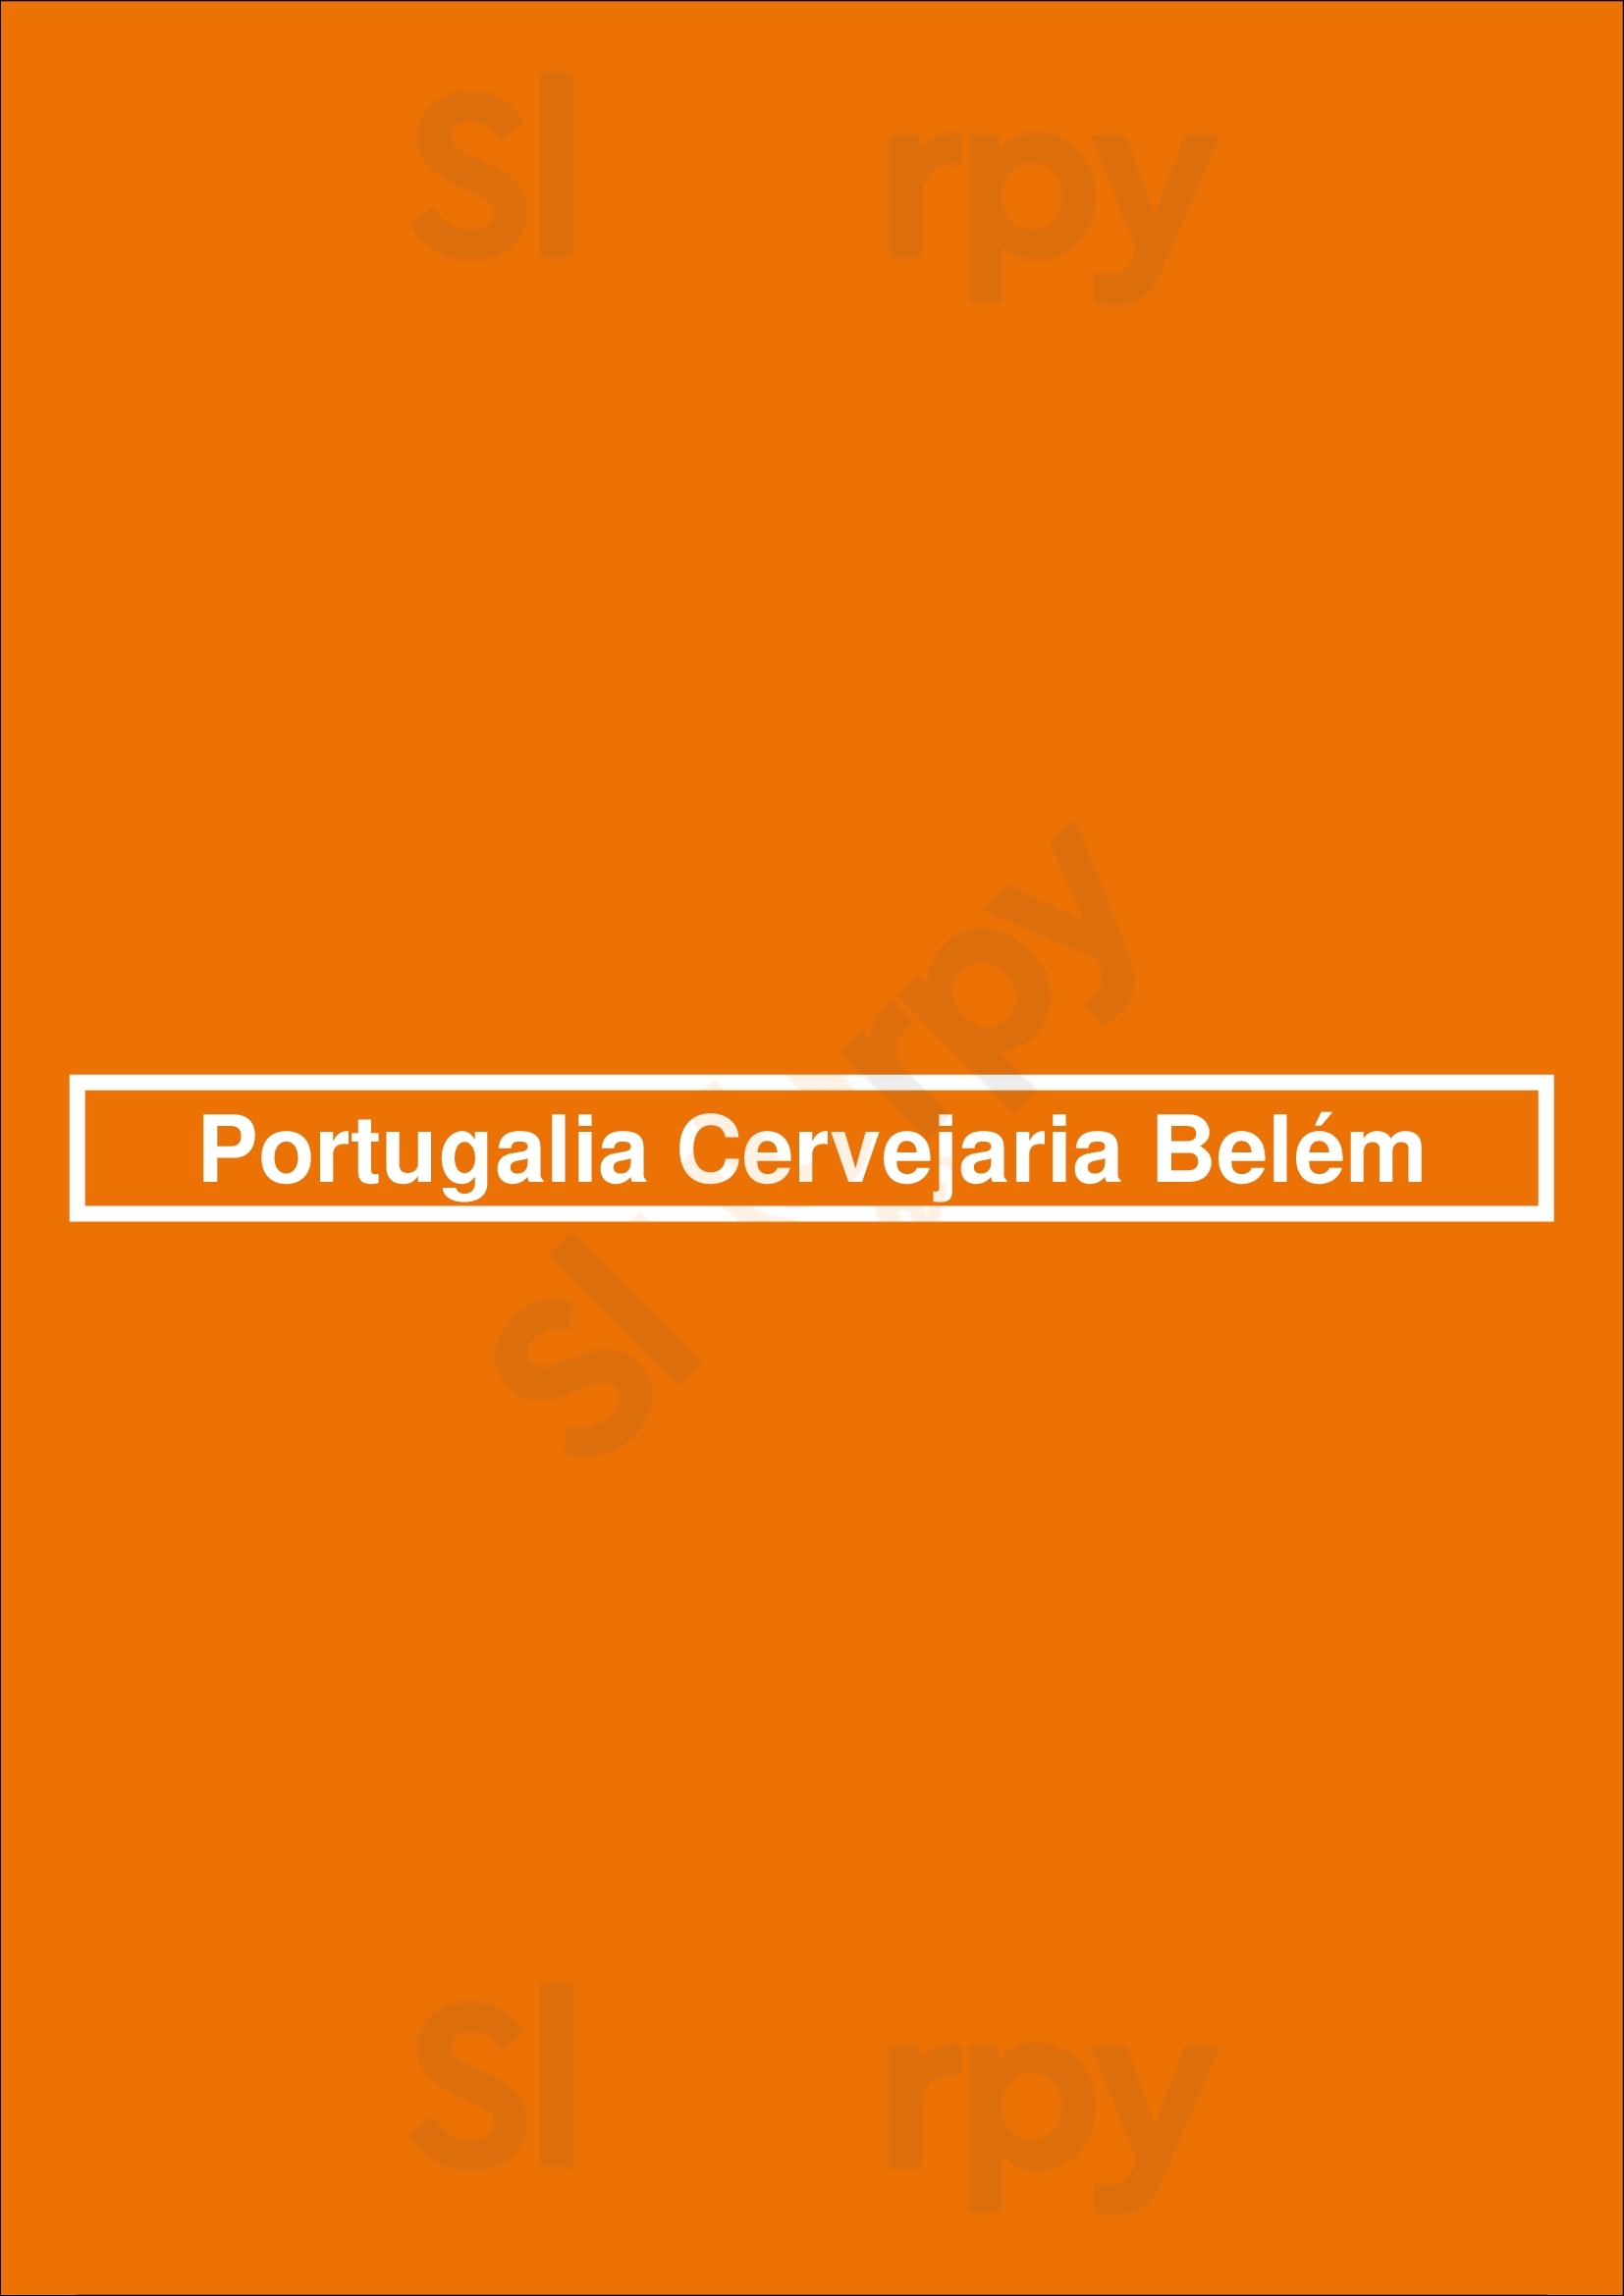 Portugália Cervejaria Belém Lisboa Menu - 1